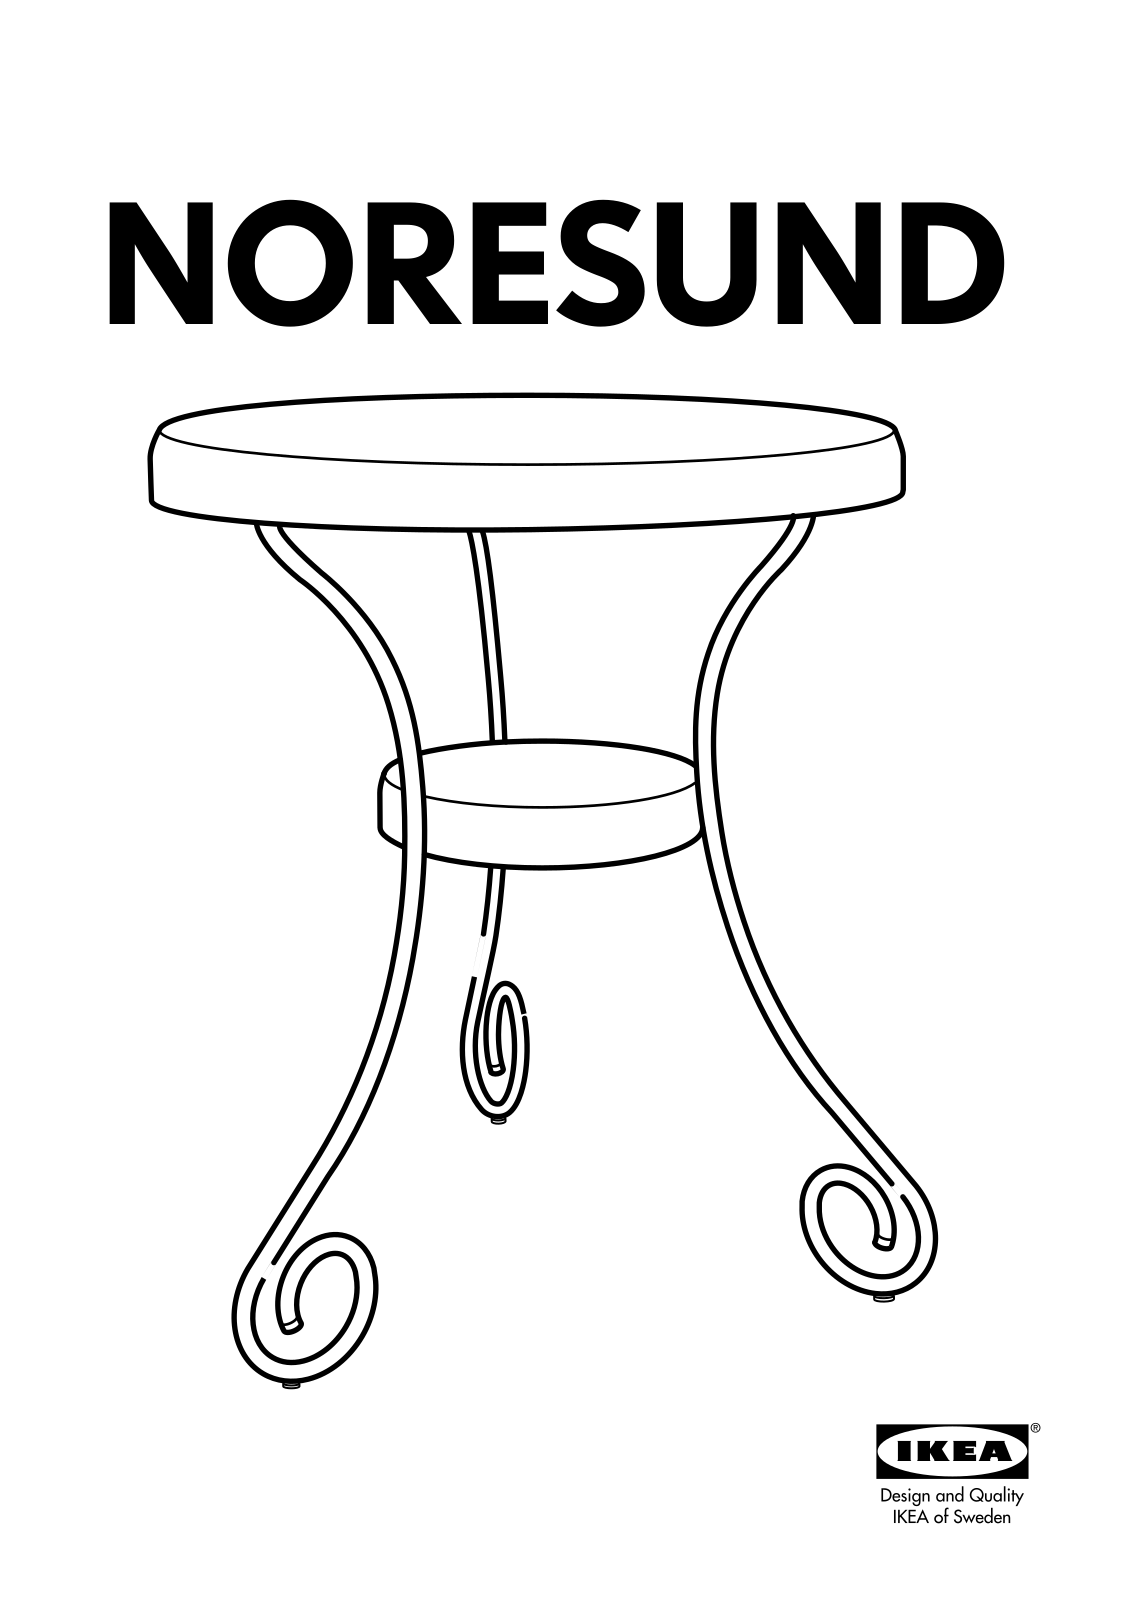 IKEA NORESUND User Manual